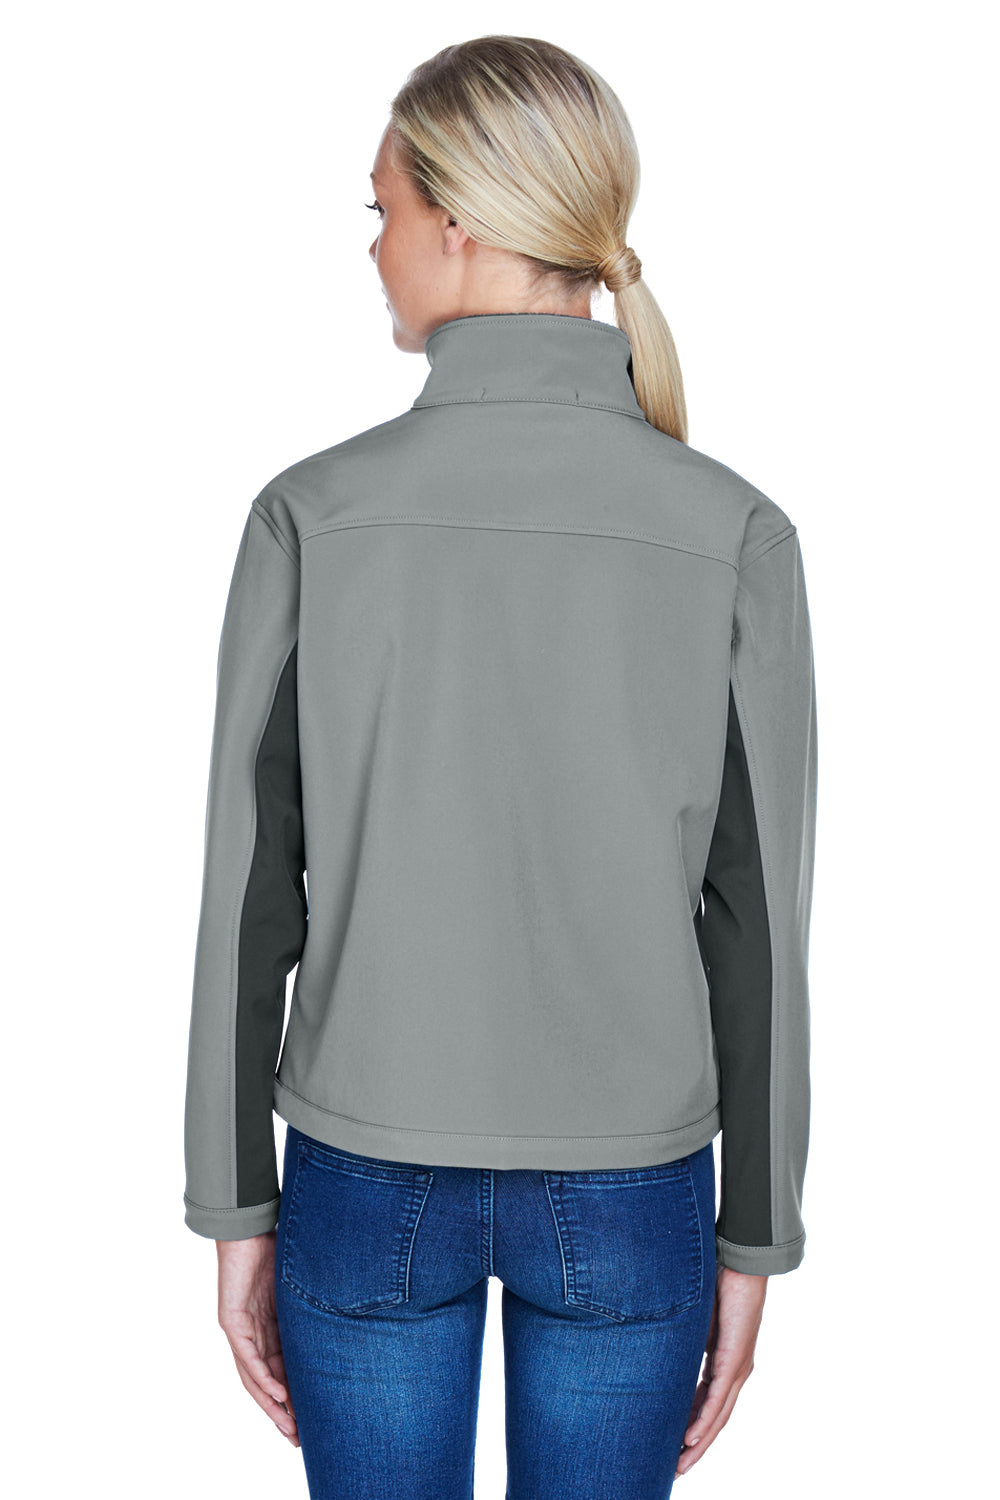 Devon & Jones D997W Womens Wind & Water Resistant Full Zip Jacket Charcoal Grey/Dark Grey Back